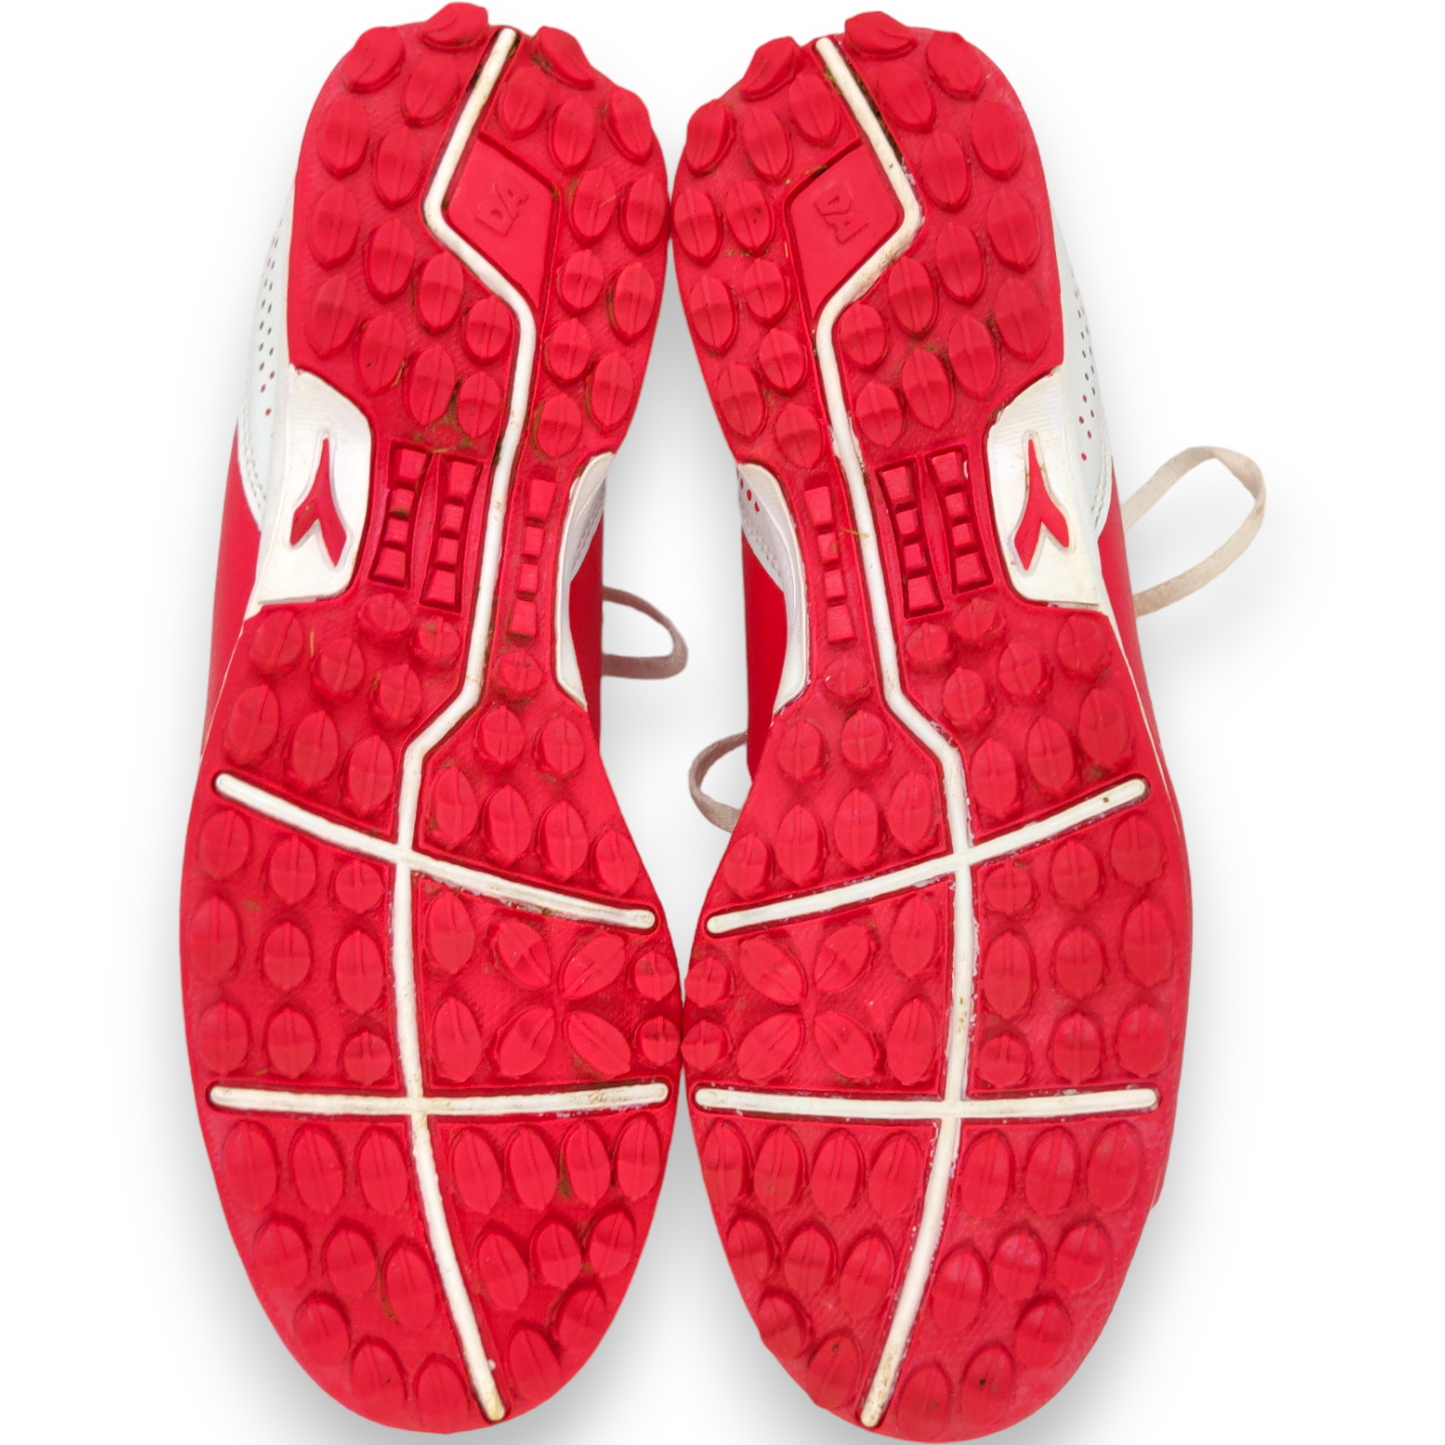 Diadora Red Boots Football Shoes Men Size UK 7